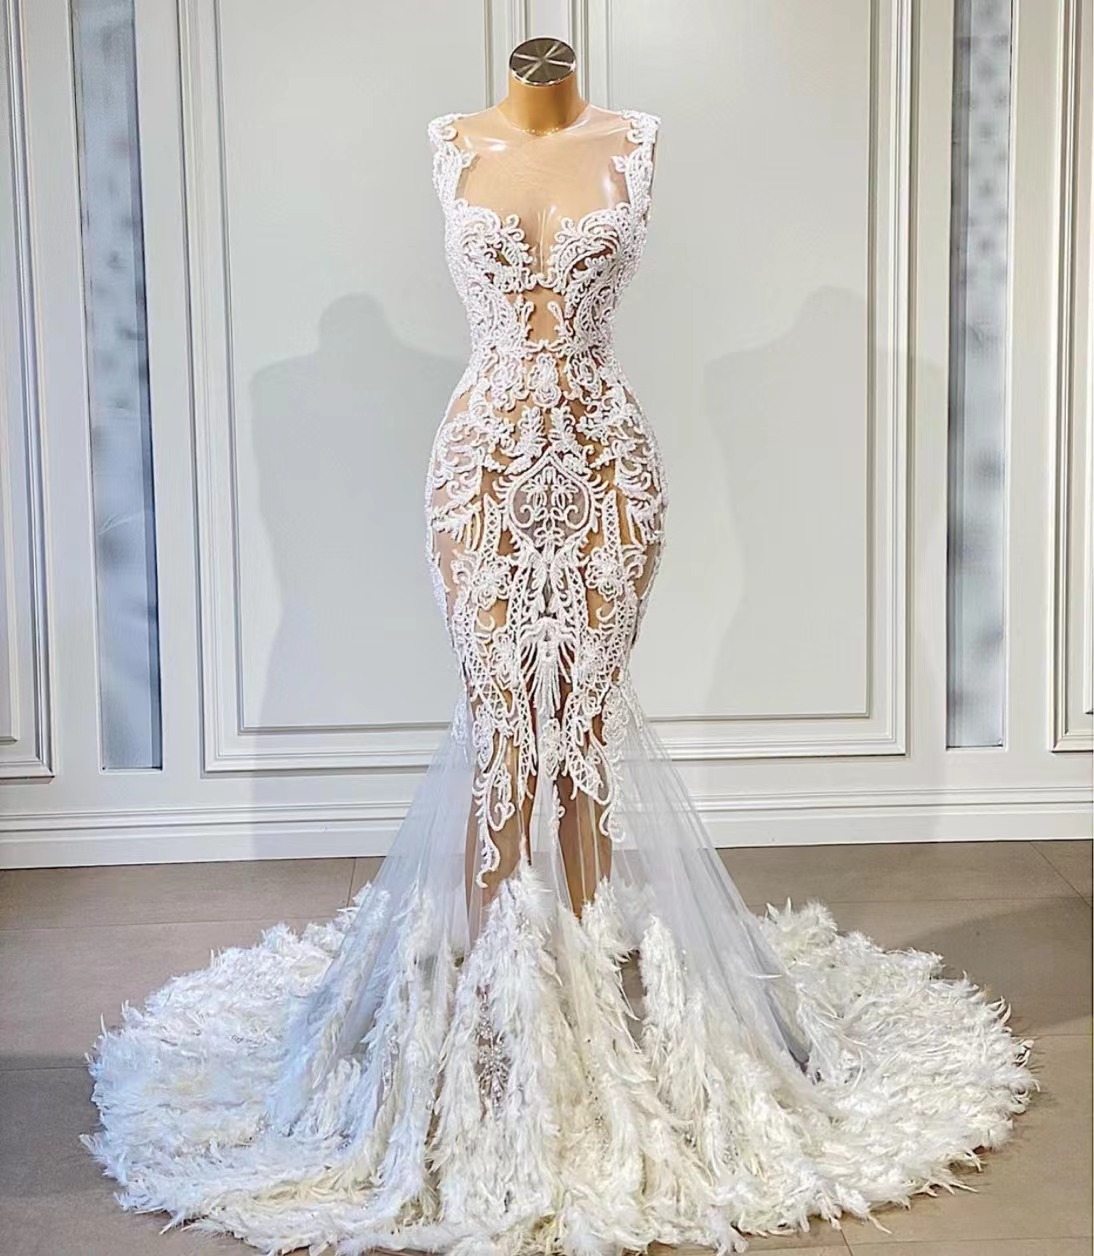 Luxury Wedding Dresses, Feather Wedding Dresses, Off White Wedding Dresses, Robe De Mariage, Mermaid Wedding Dresses, Lace Applique Wedding